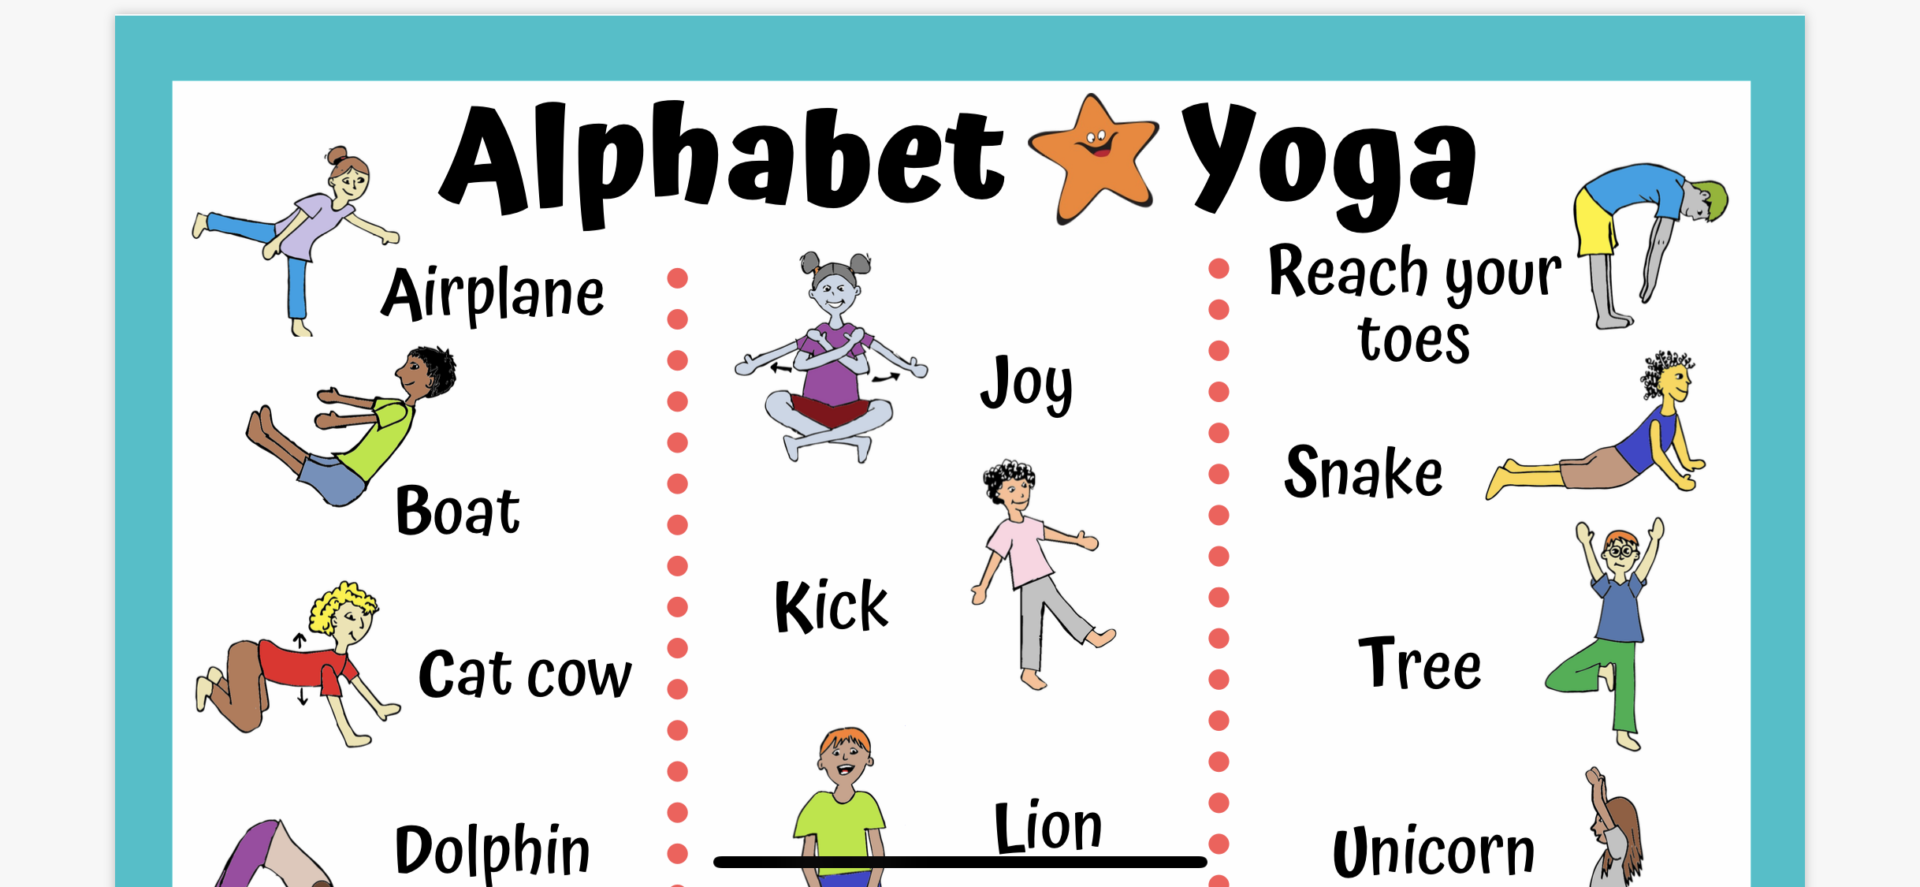 Alphabet Yoga Poses For Kids